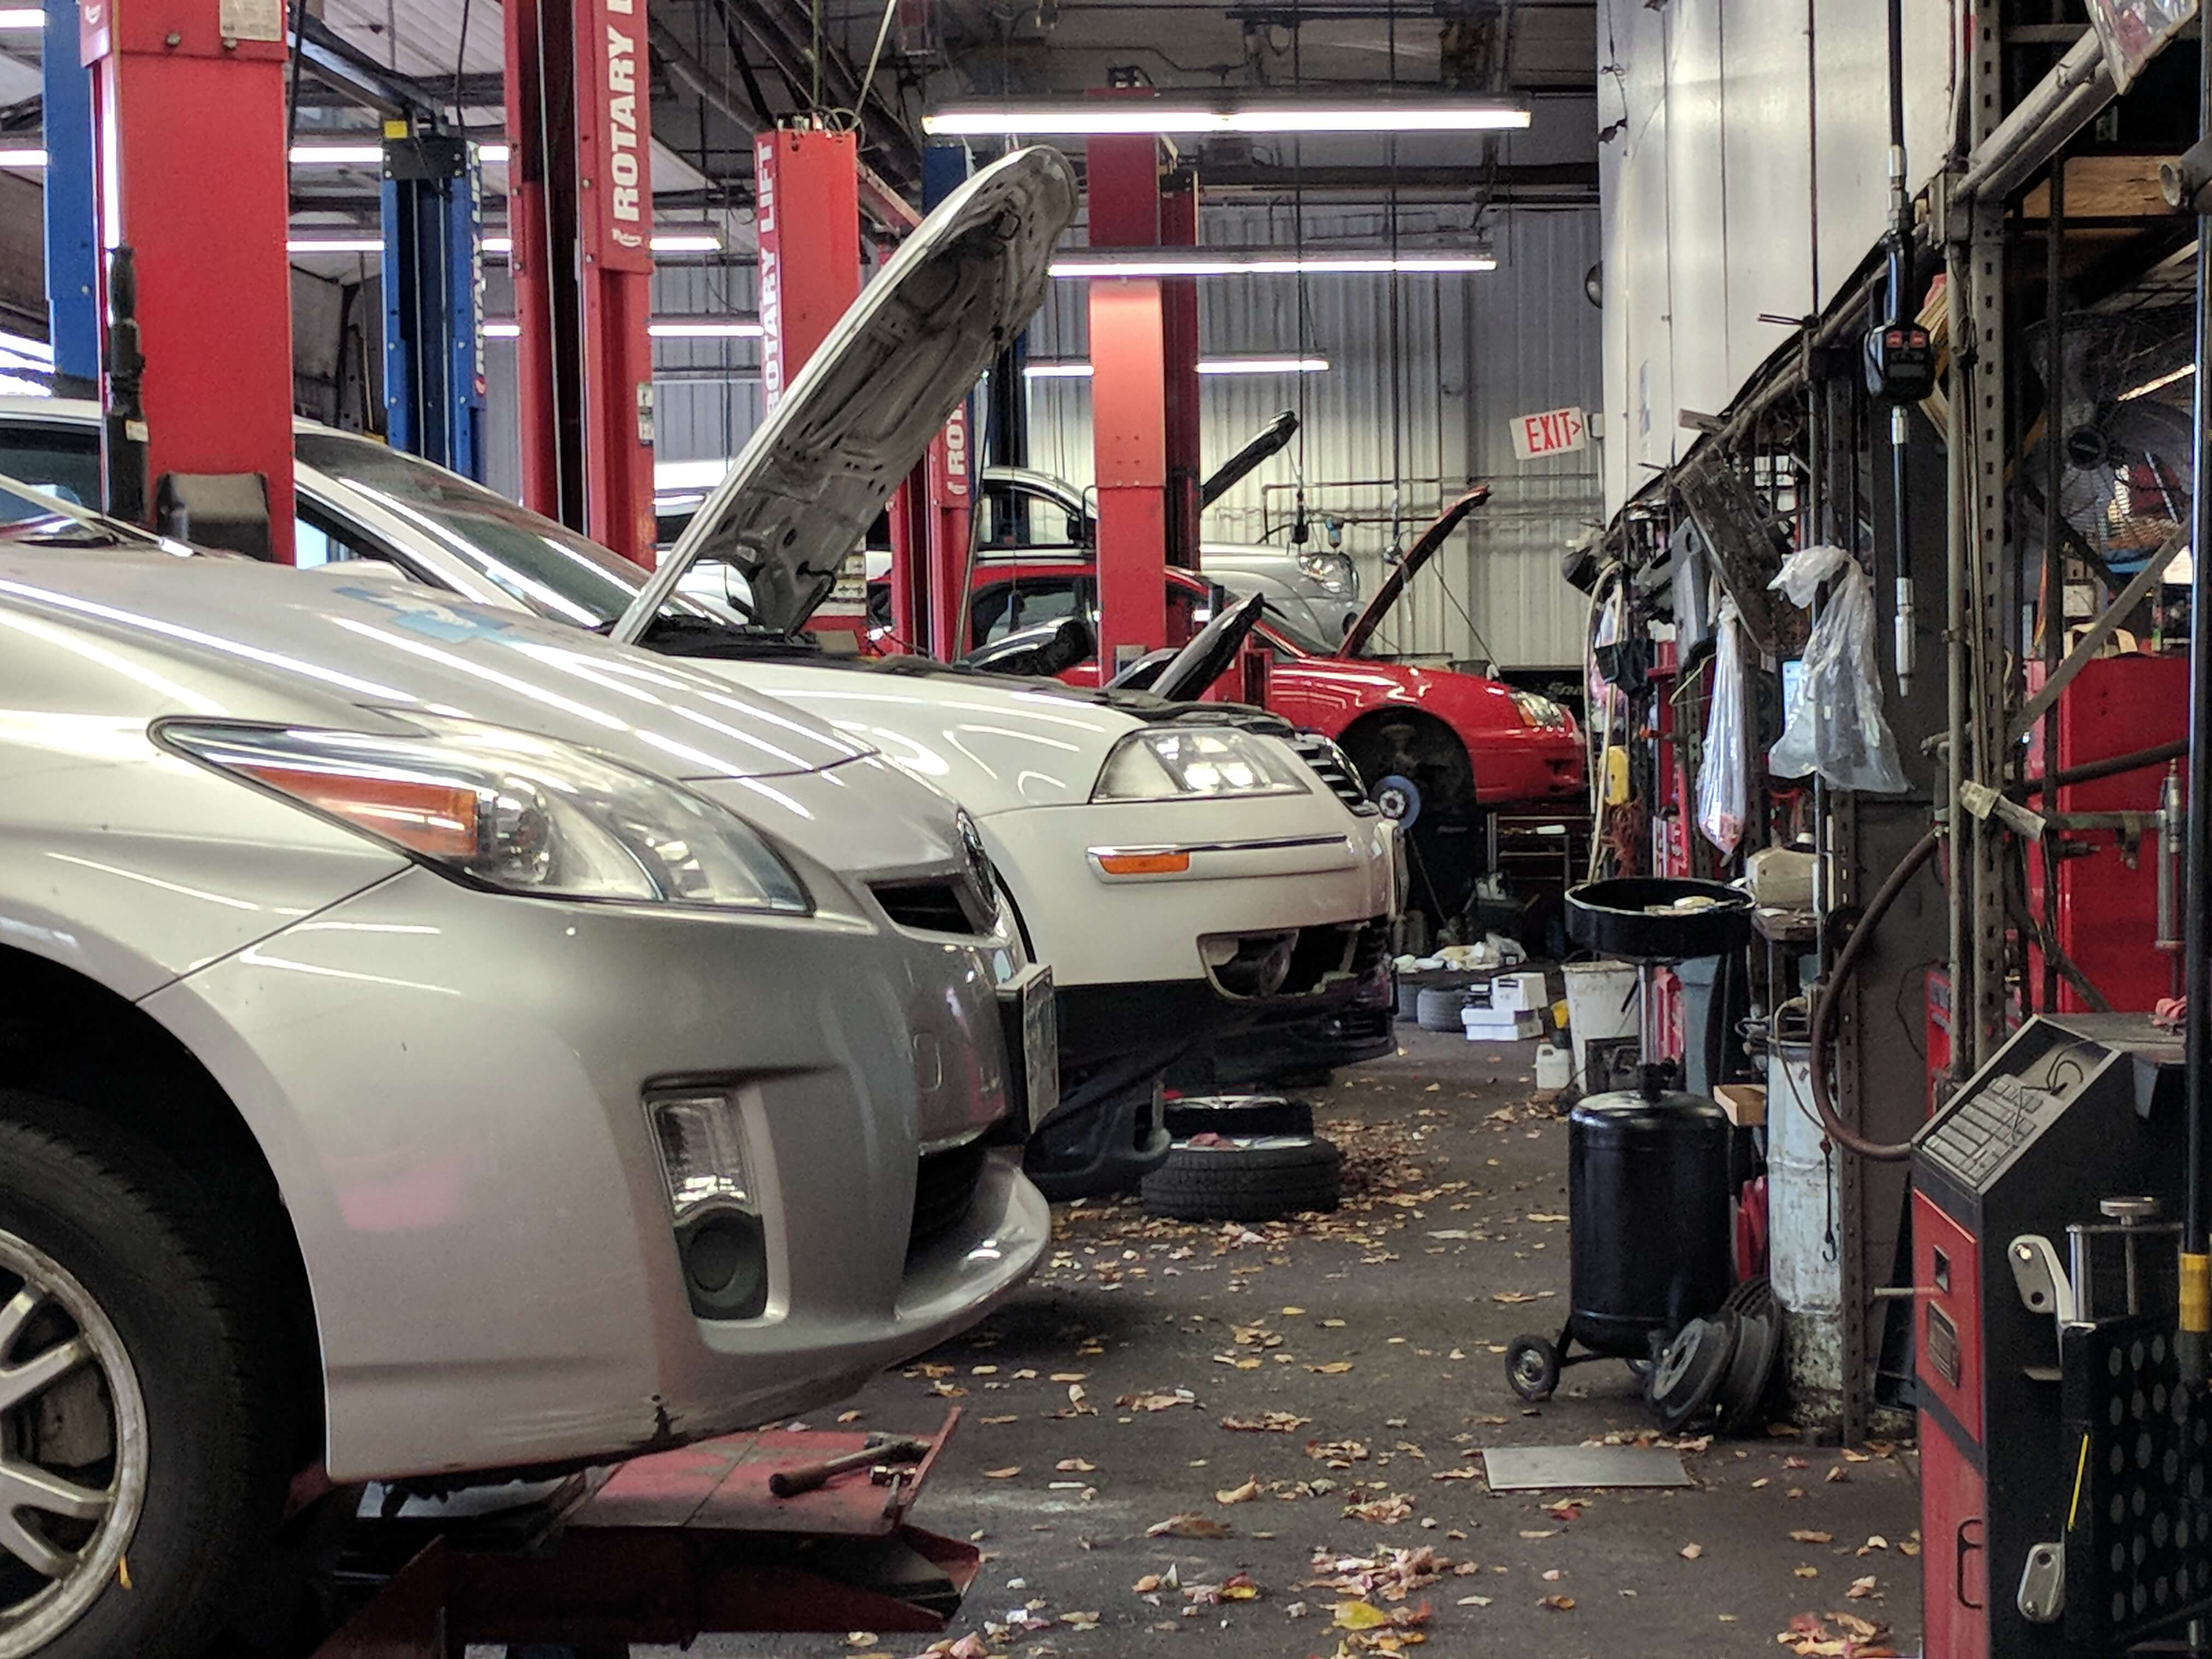 How South Burlington Midas auto repair uses tech to build customer